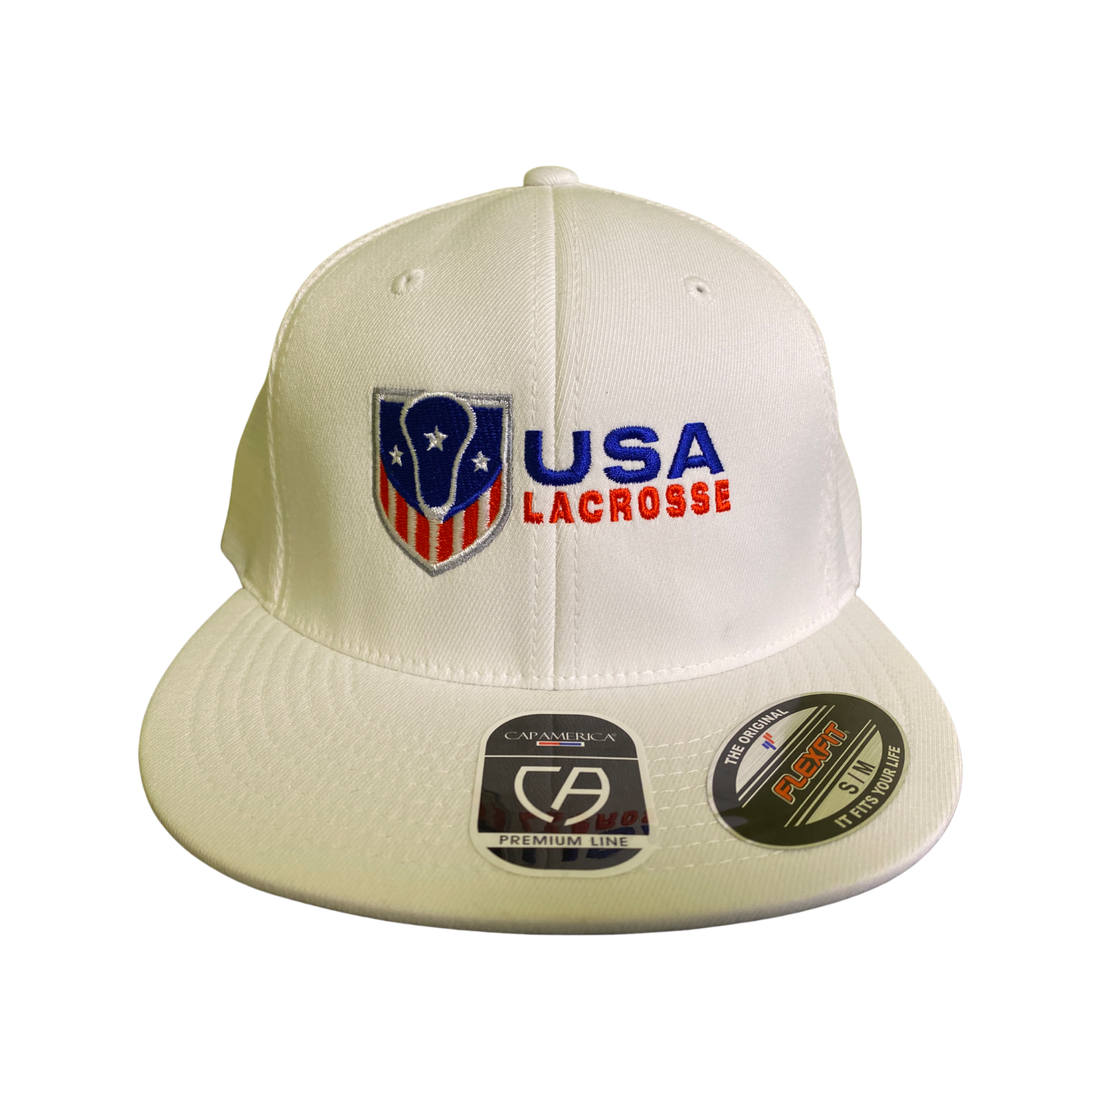 USA Lacrosse Flexfit Hat*